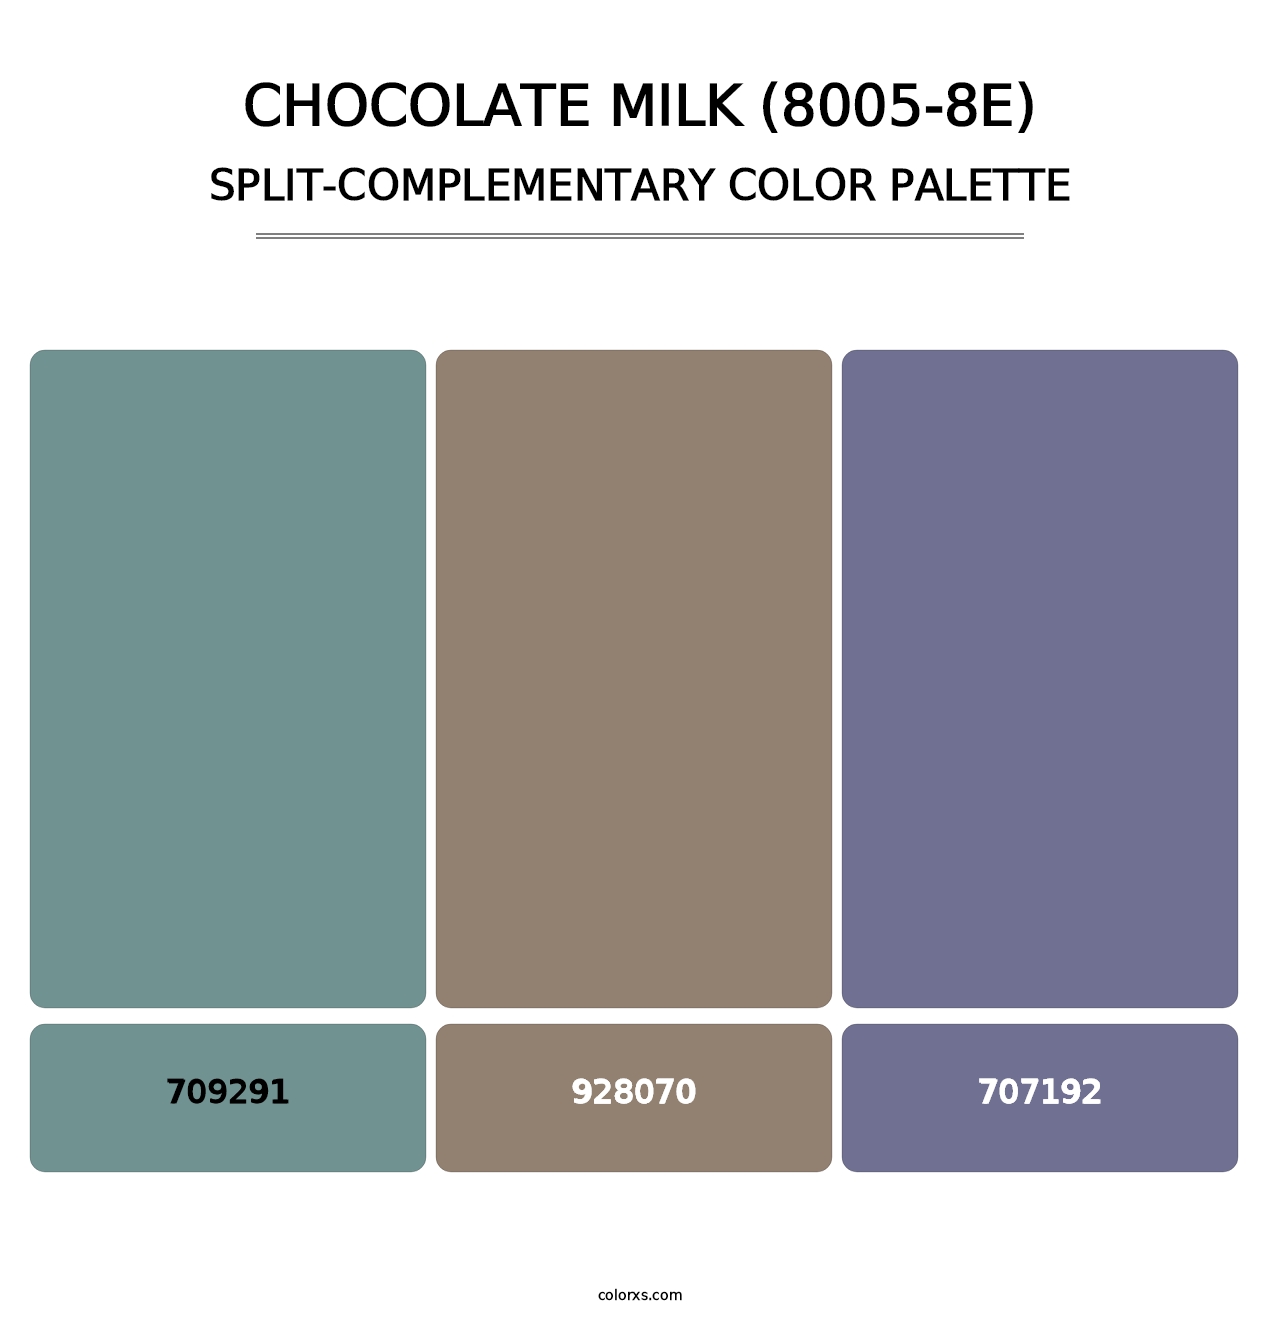 Chocolate Milk (8005-8E) - Split-Complementary Color Palette